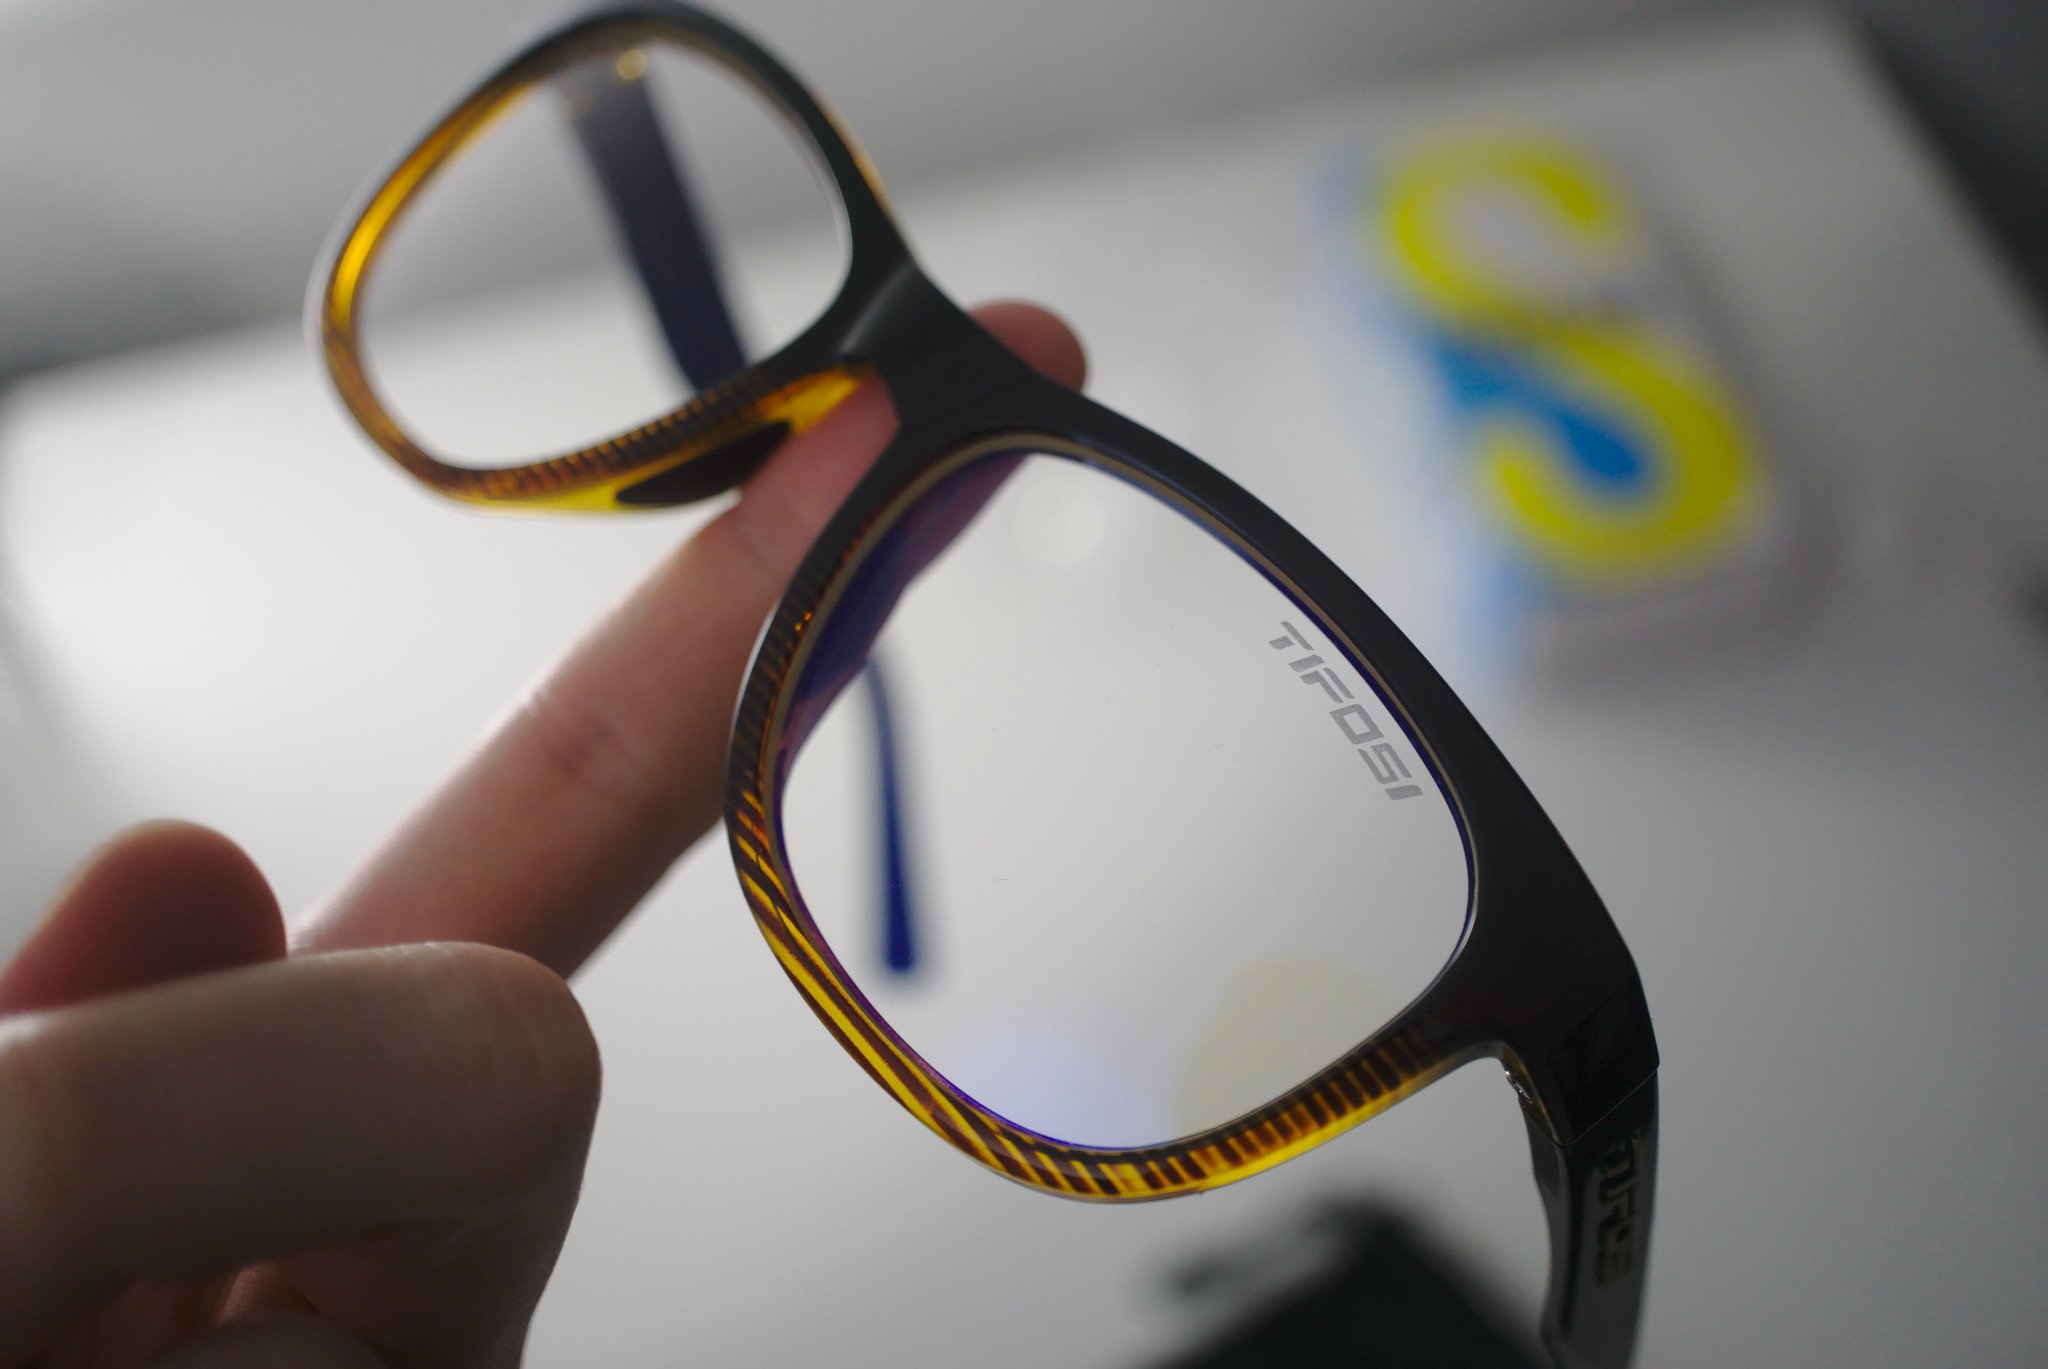 https://www.windowscentral.com/sites/wpcentral.com/files/styles/large_wm_brw/public/field/image/2020/02/tifosi-swank-gaming-glasses-lens.jpg?itok=1UfHJt3X